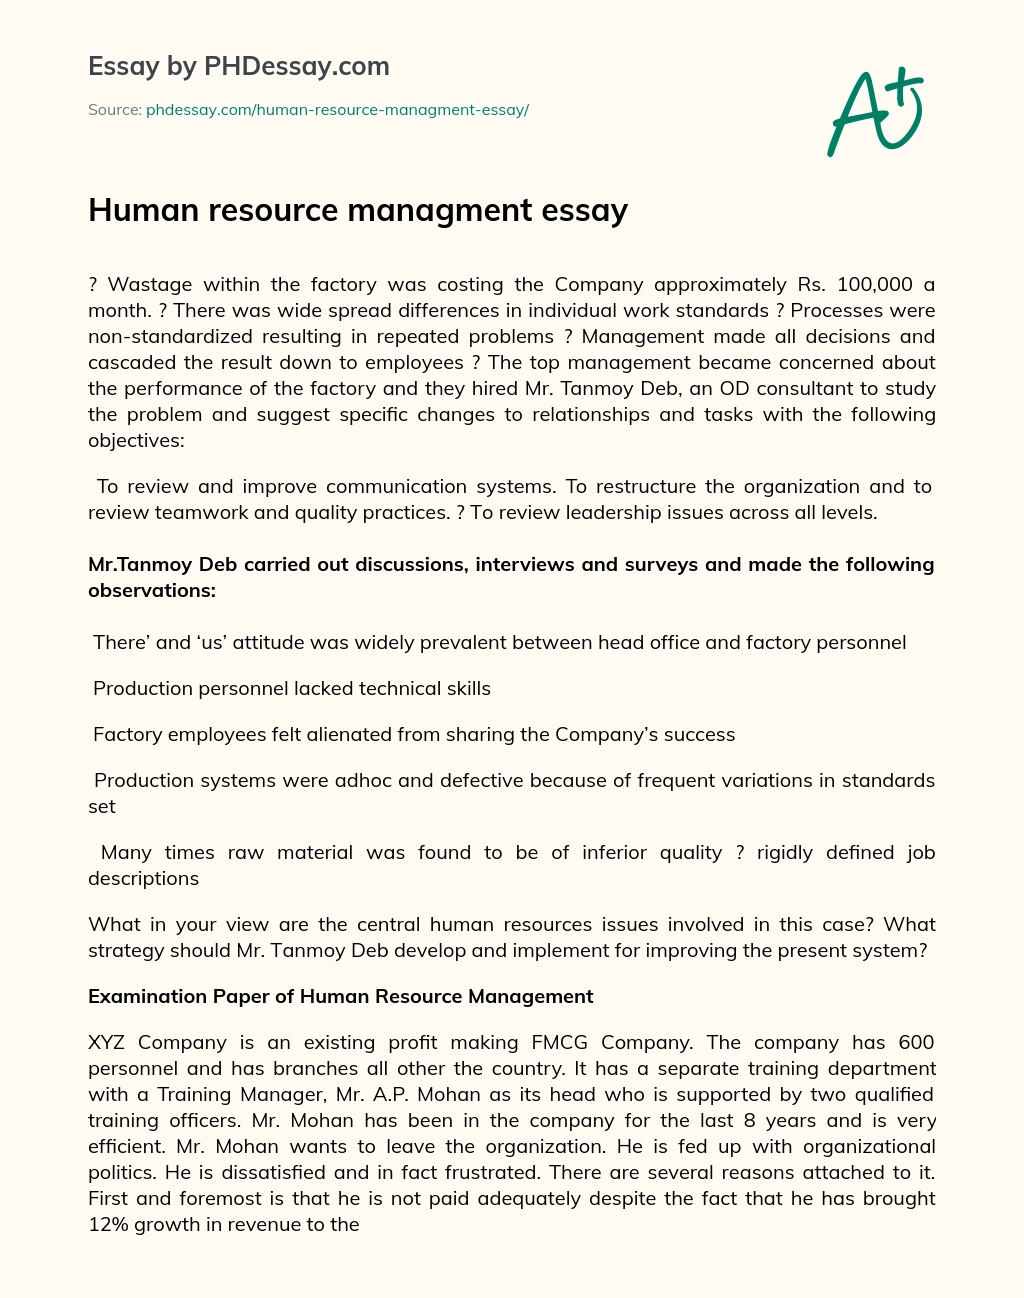 Human resource managment essay essay